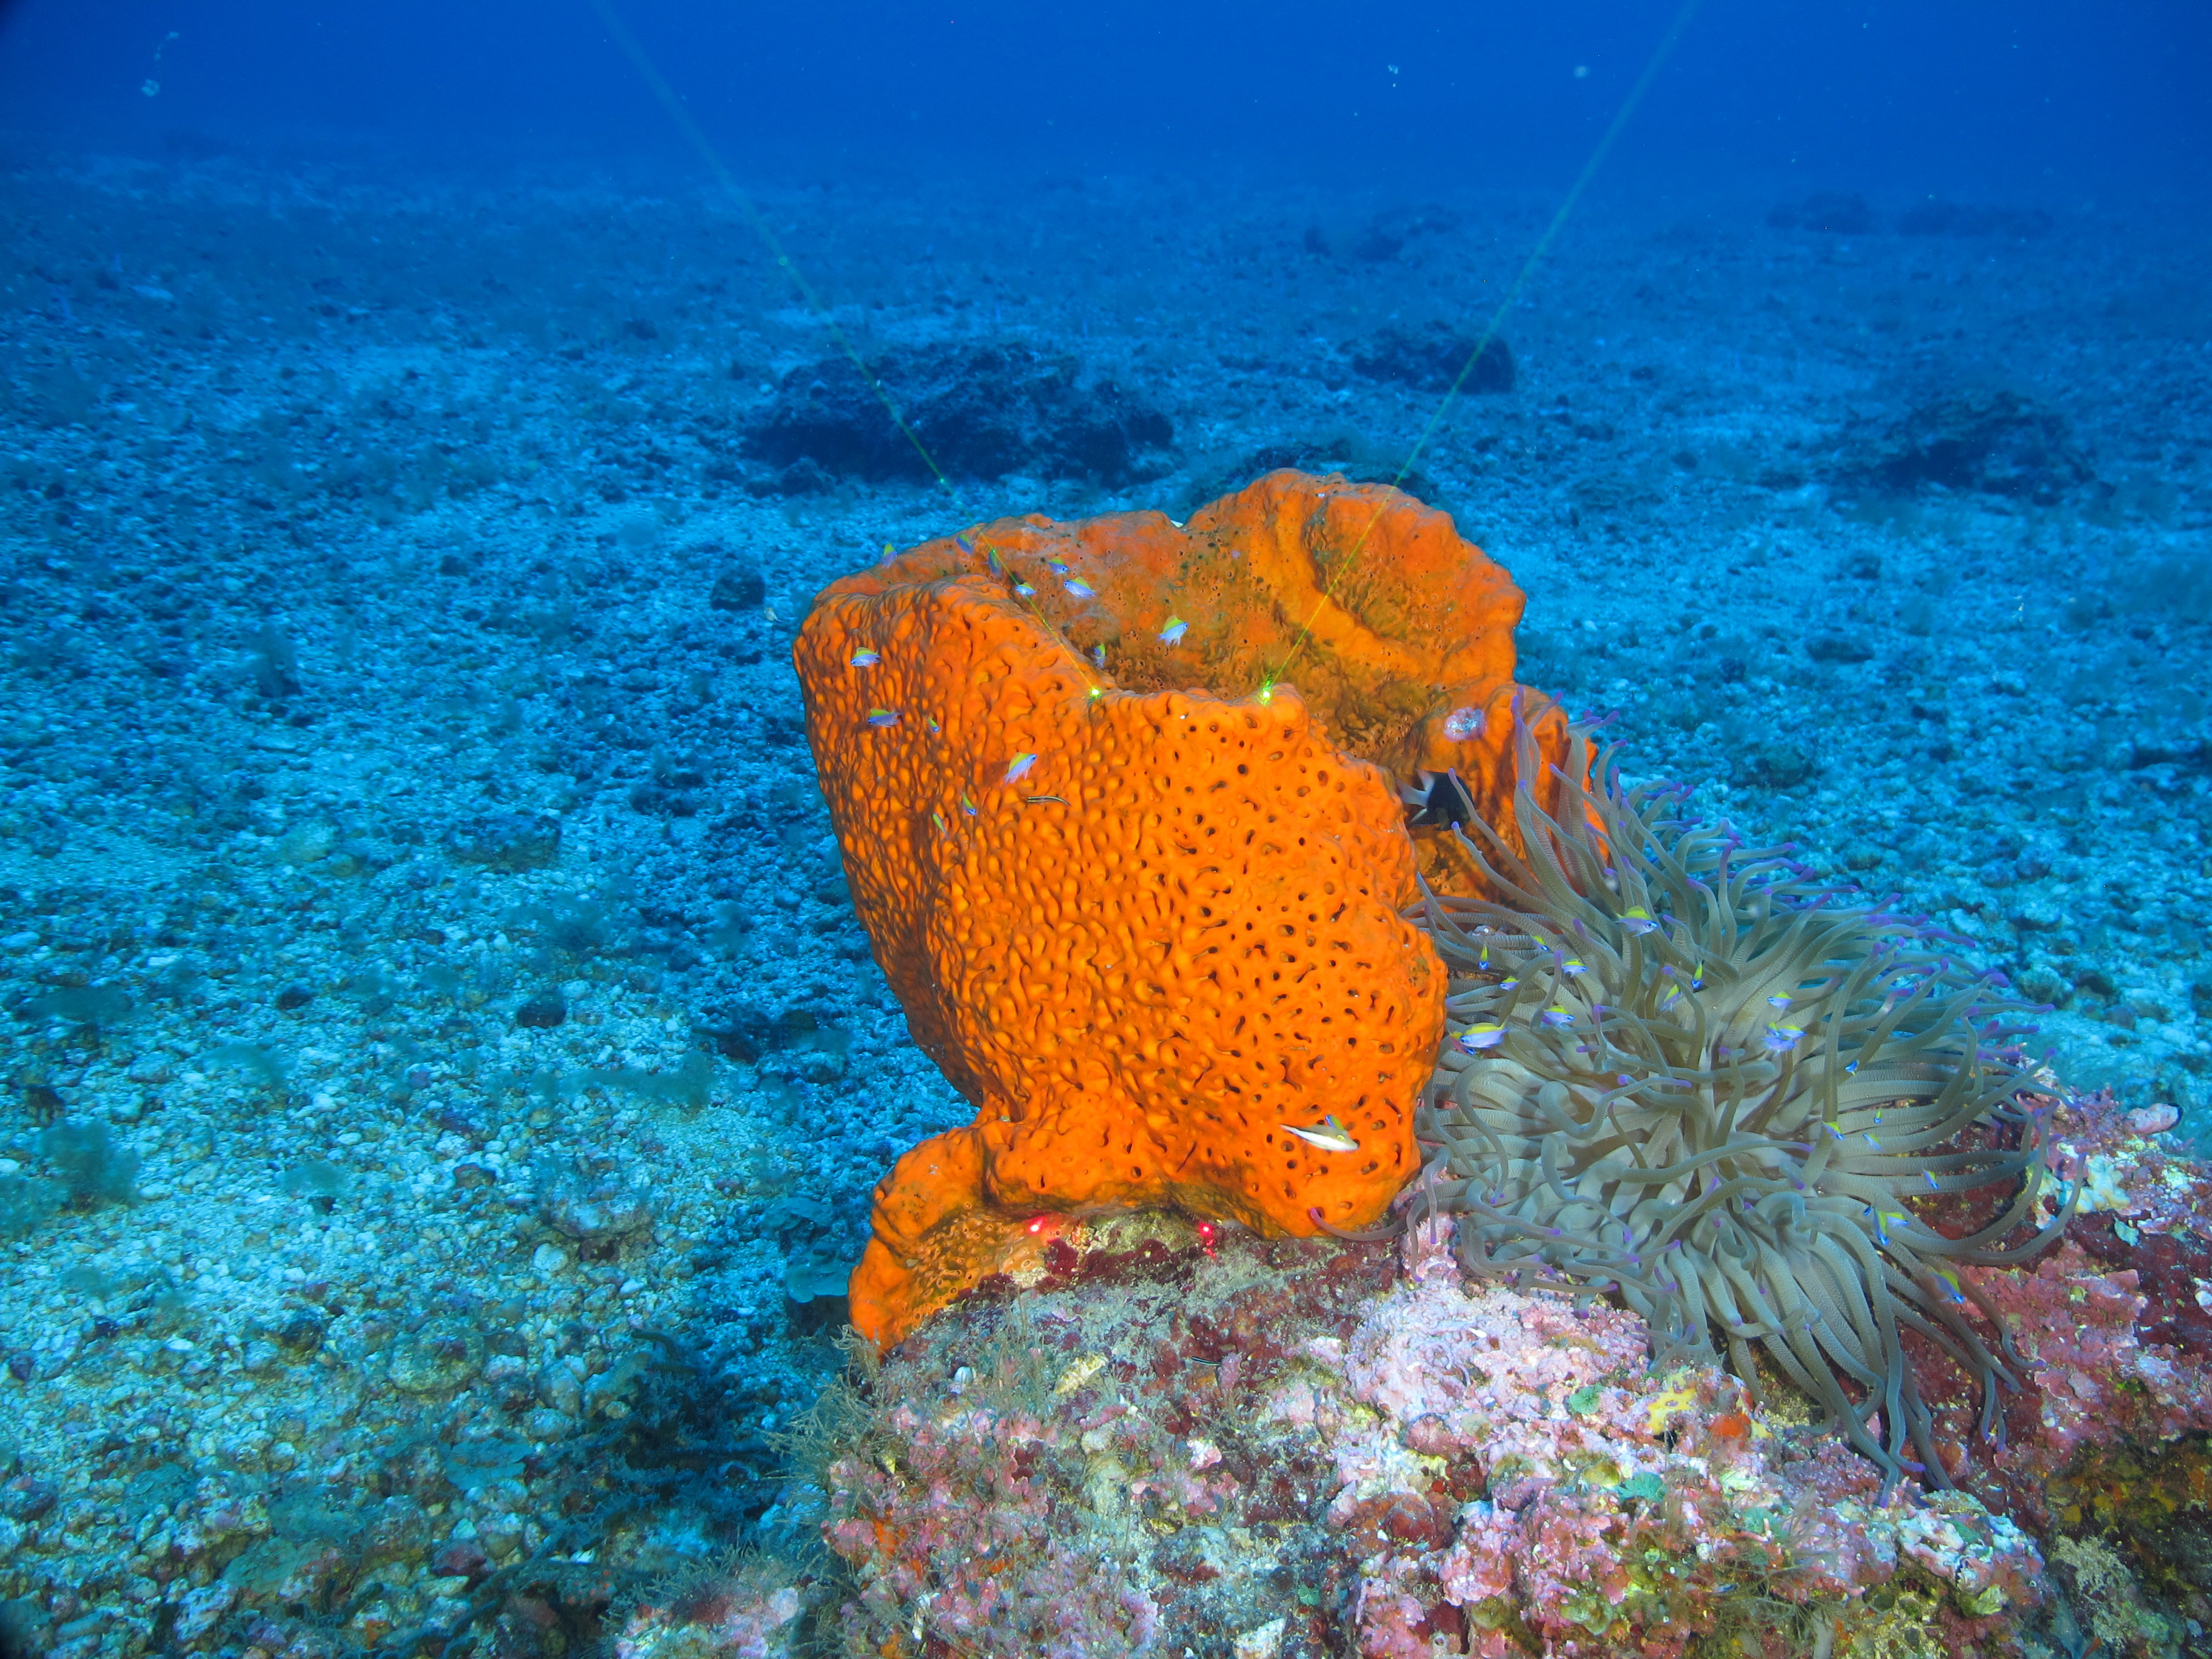 Ocean Sponges, Sea Sponges, Sponges for saltwater aquariums